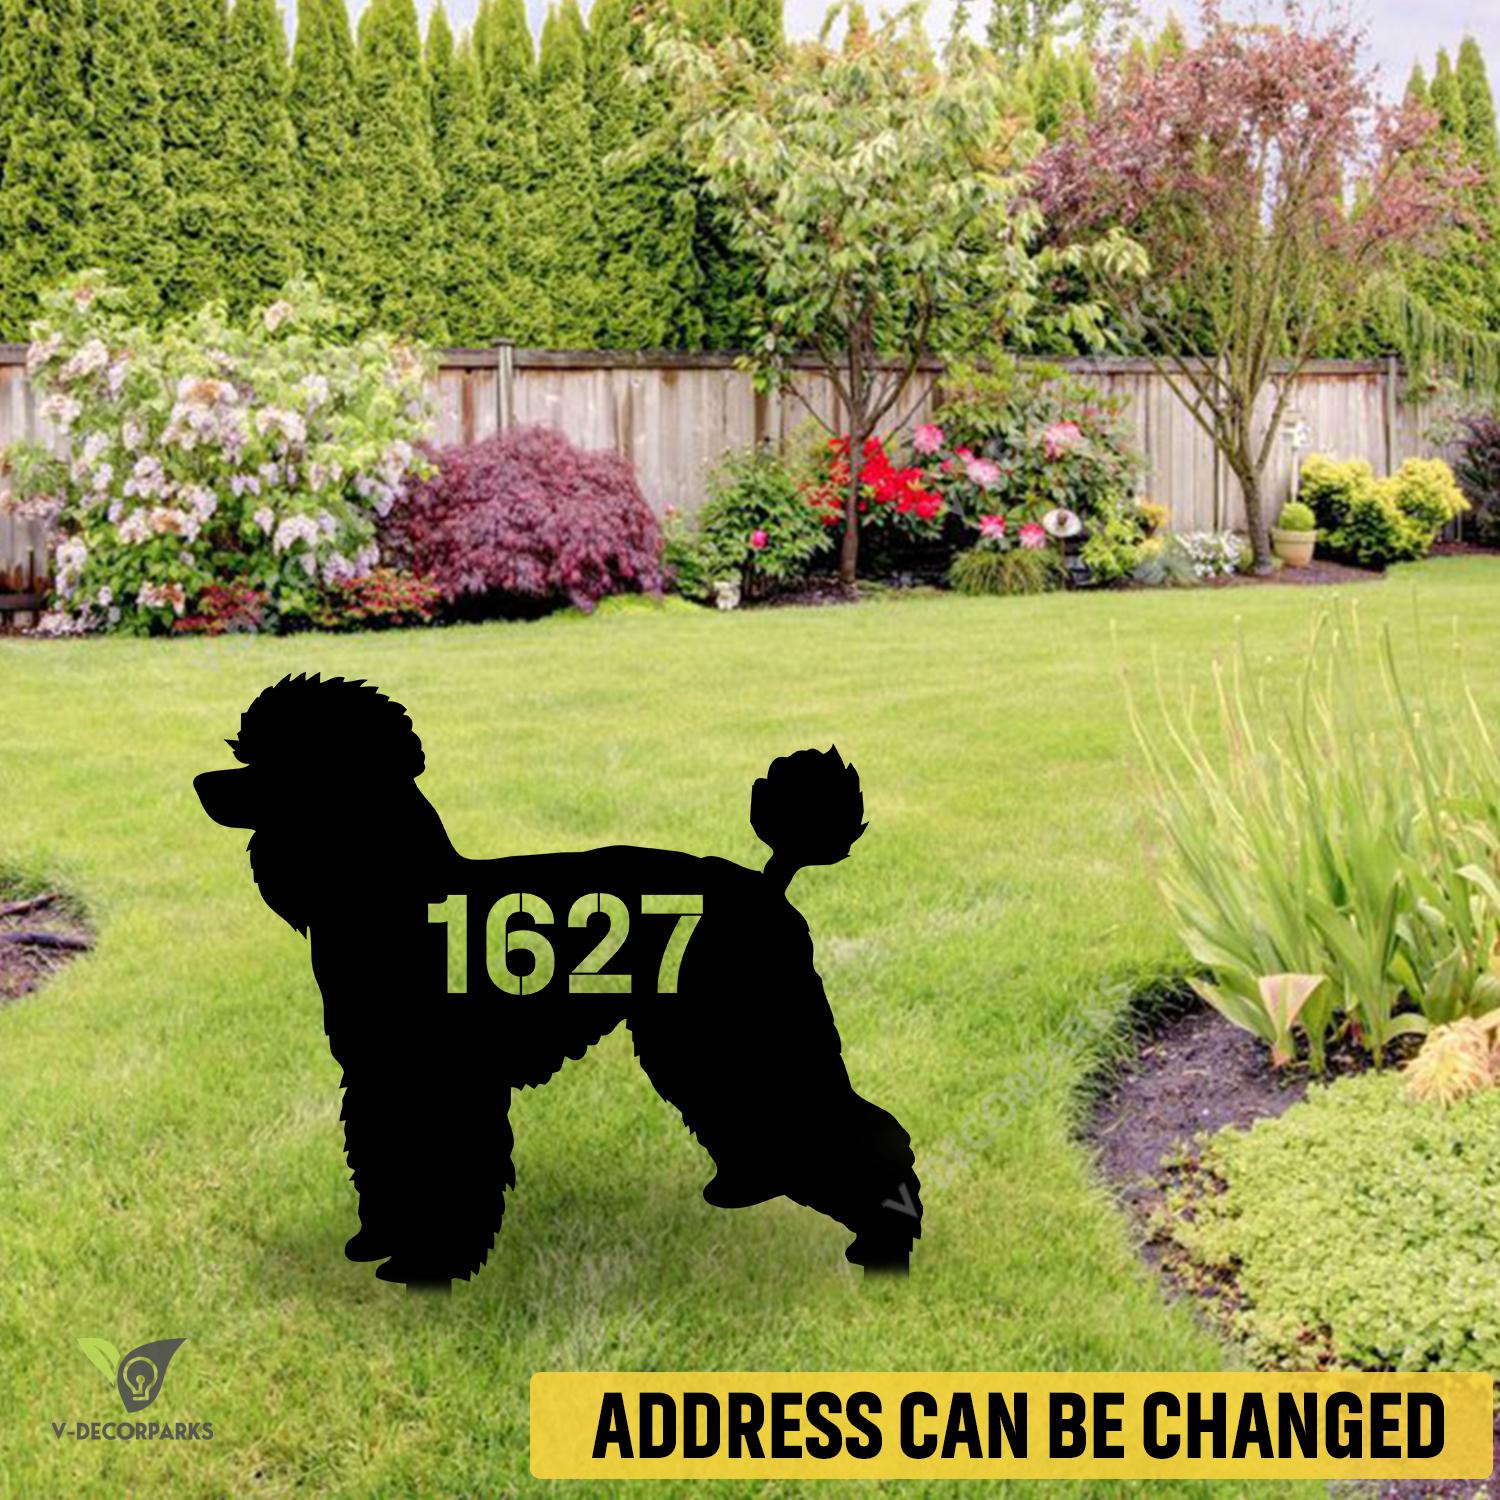 Personalized Address Number Standard Poodle Dog Metal Garden Decoration, Standard Poodle Outdoor Accent